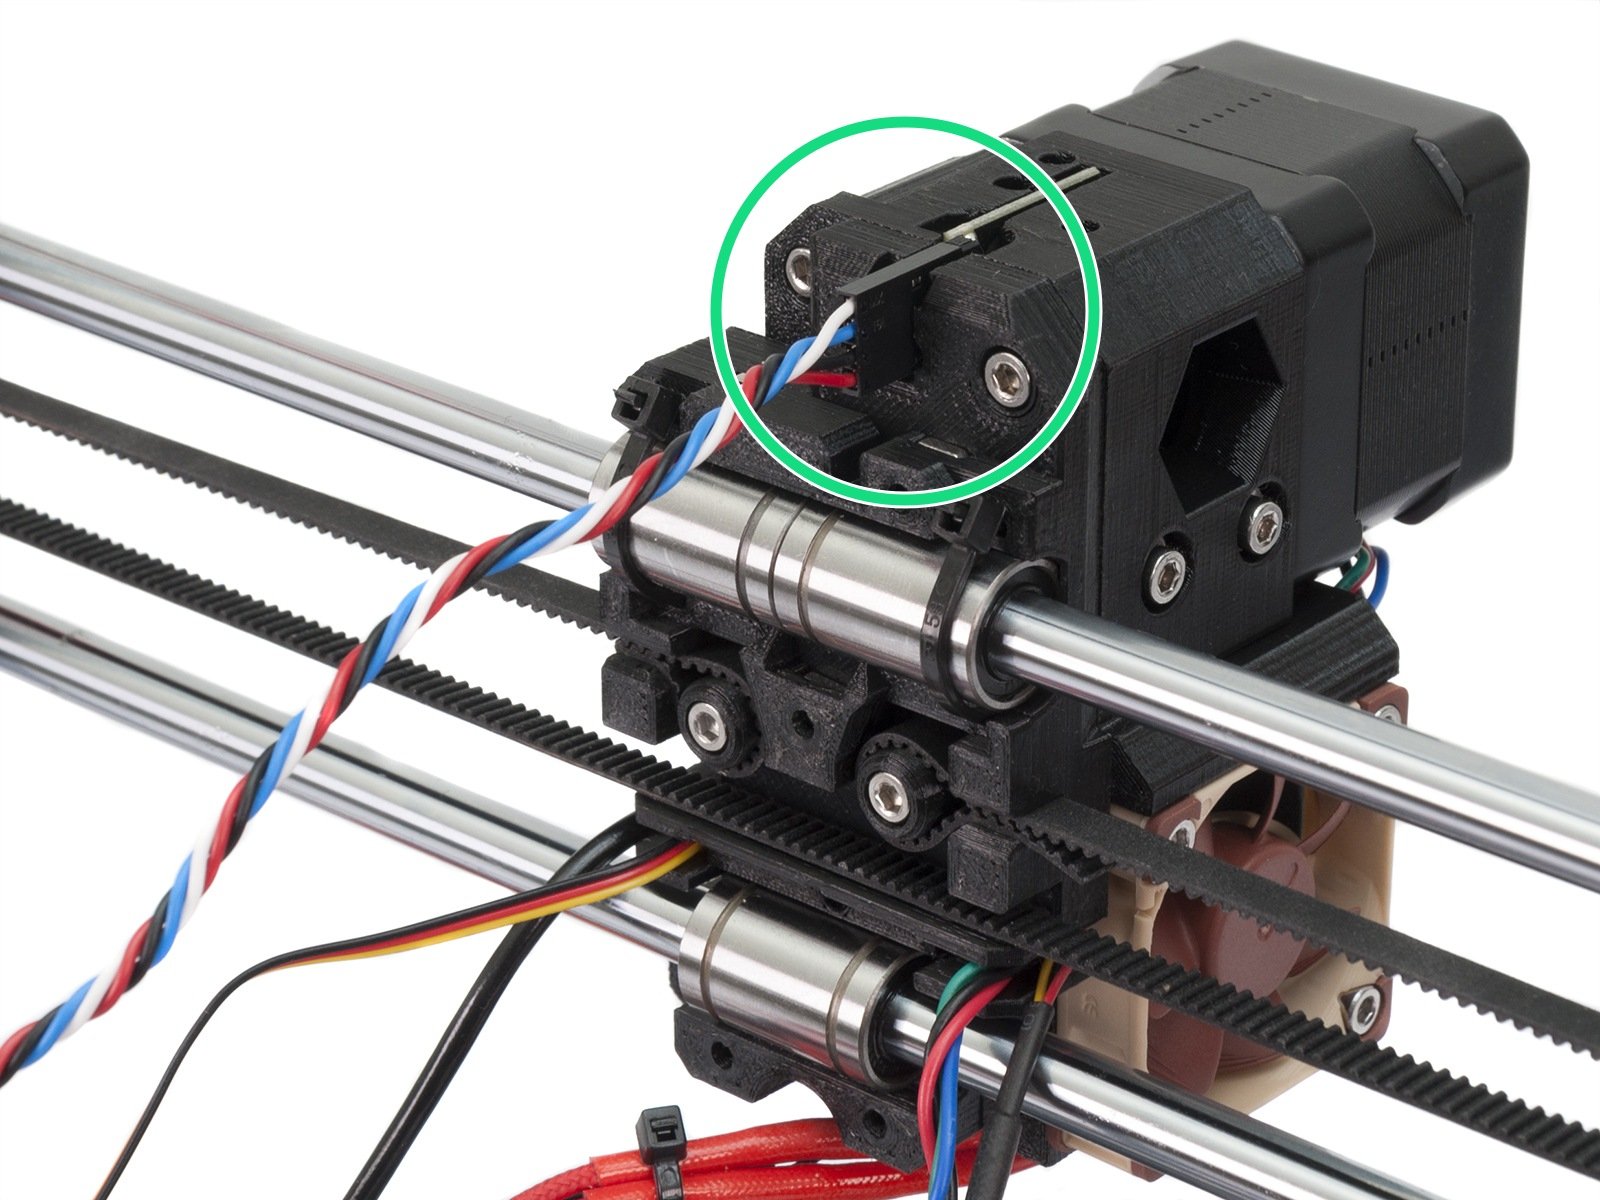 Connecting the Filament sensor